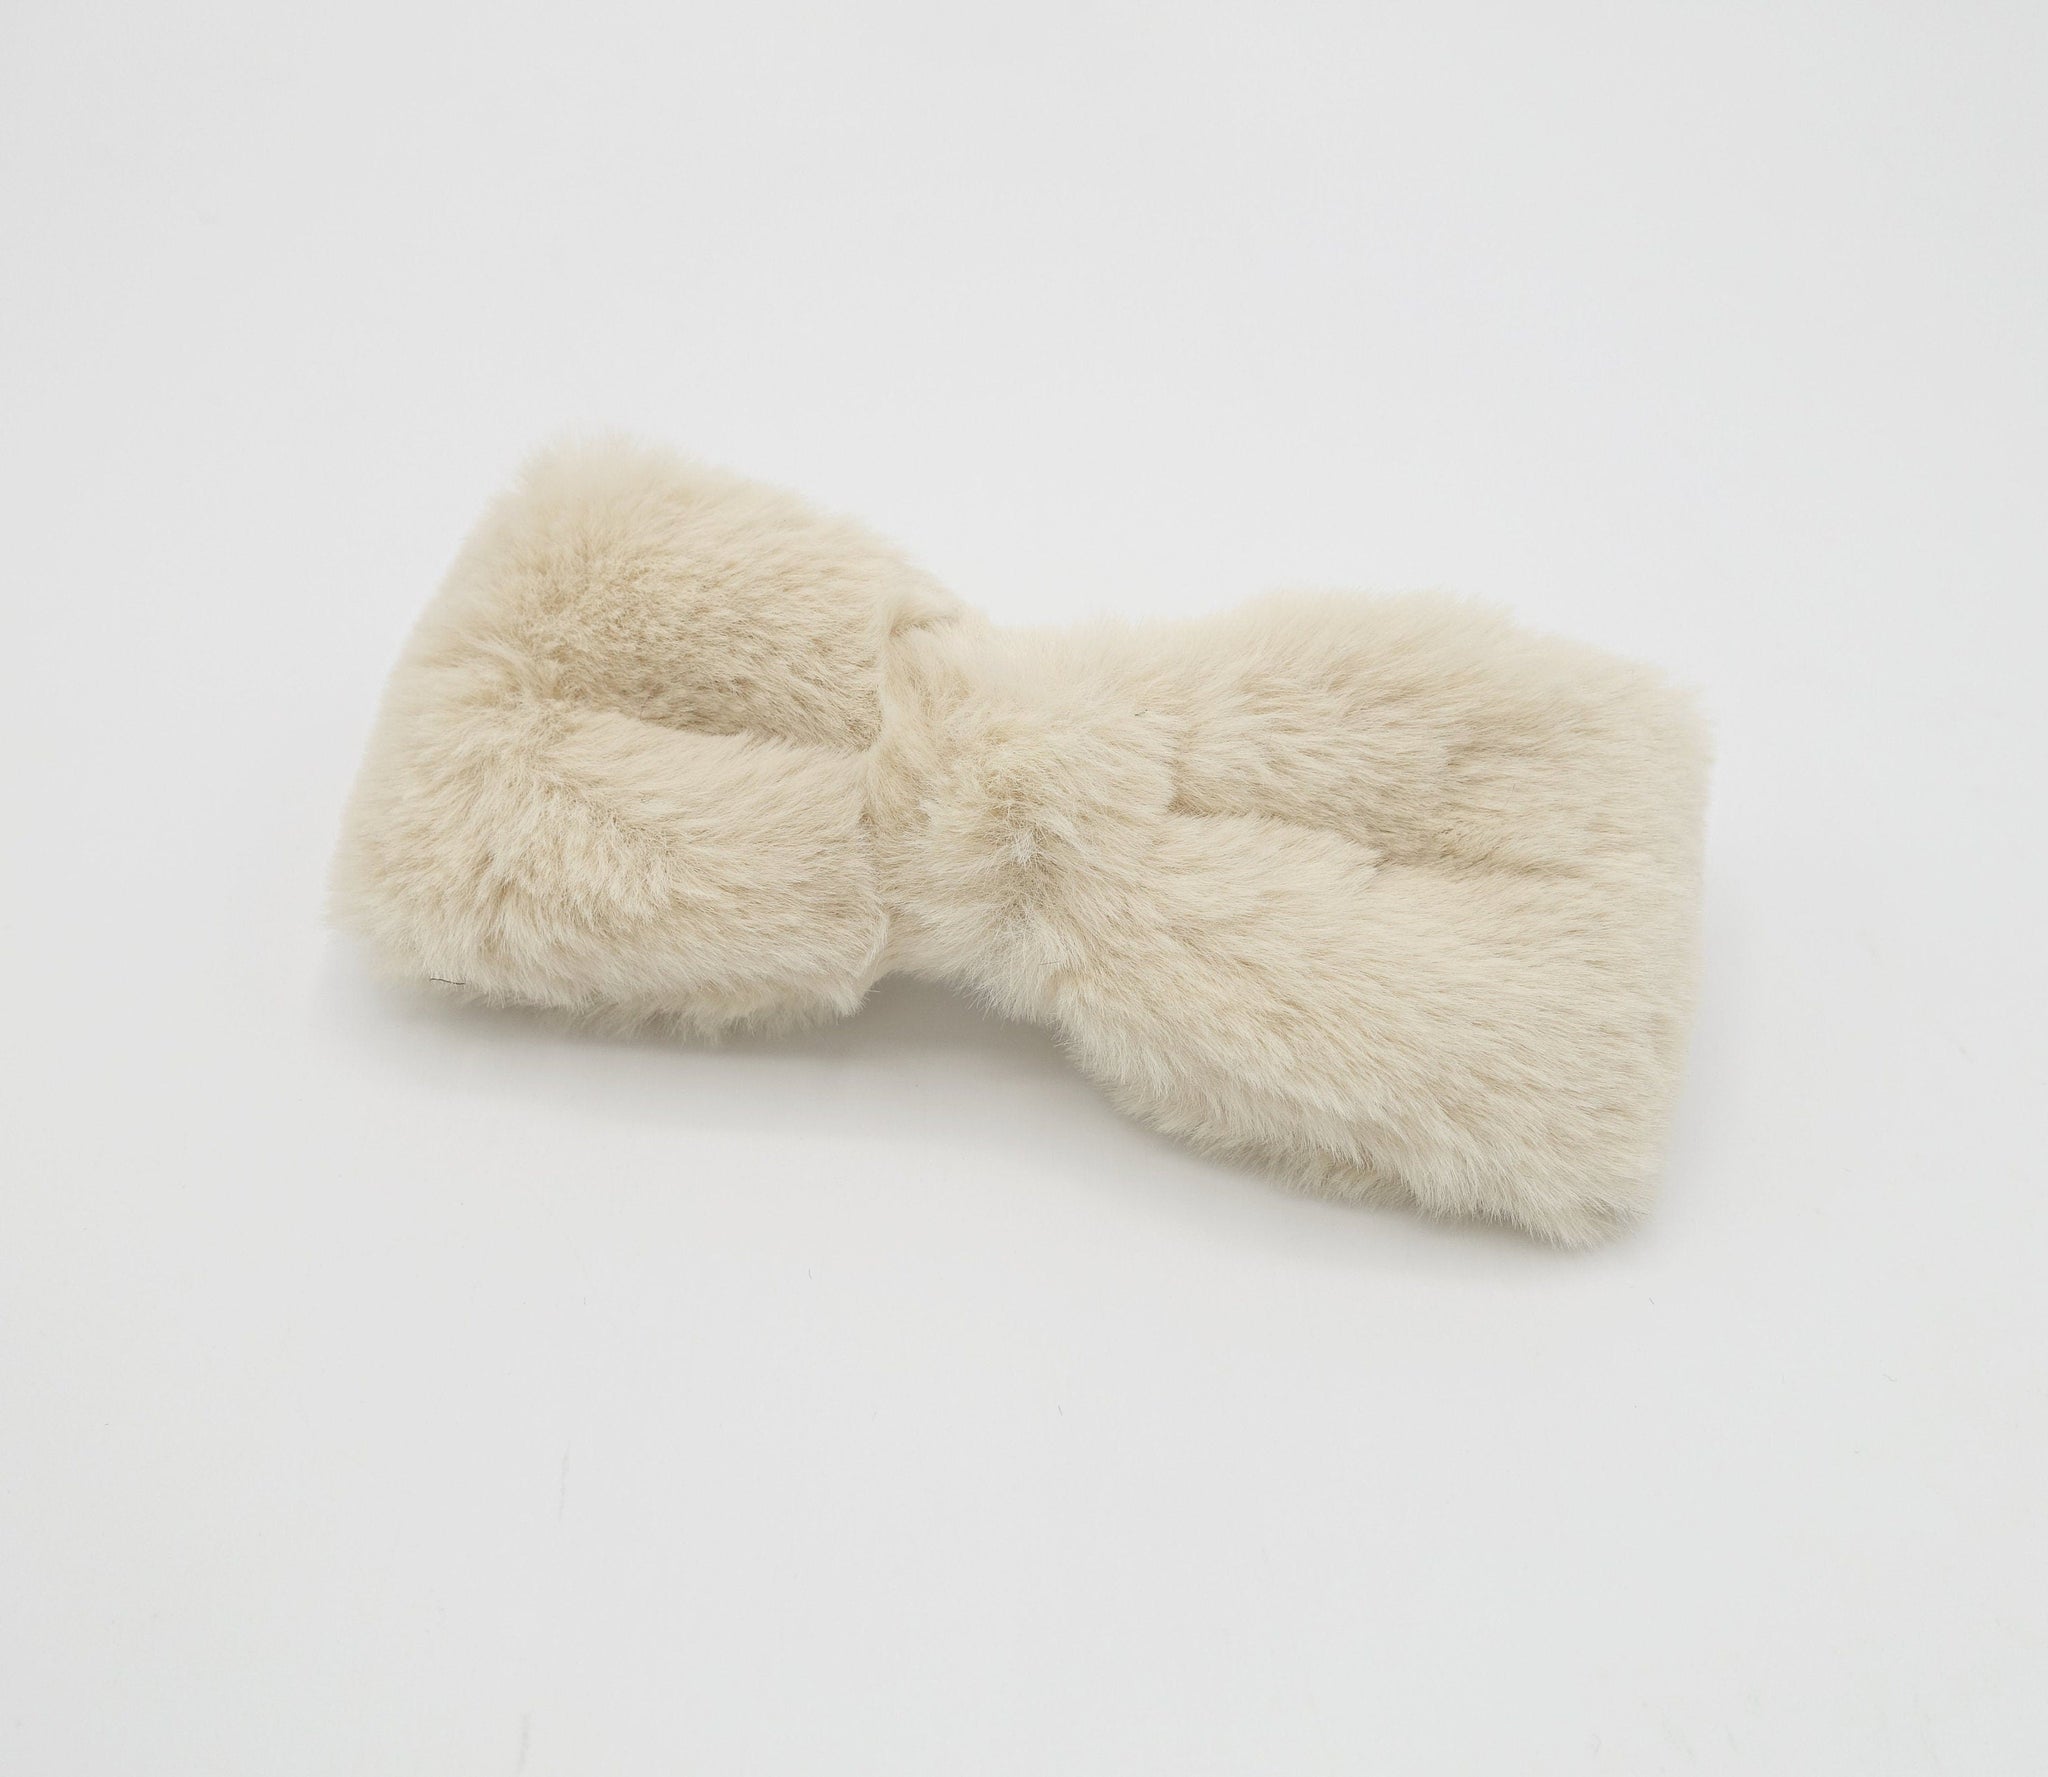 veryshine.com Barrette (Bow) Beige fabric fur hair bow soft Winter hair accessory for women